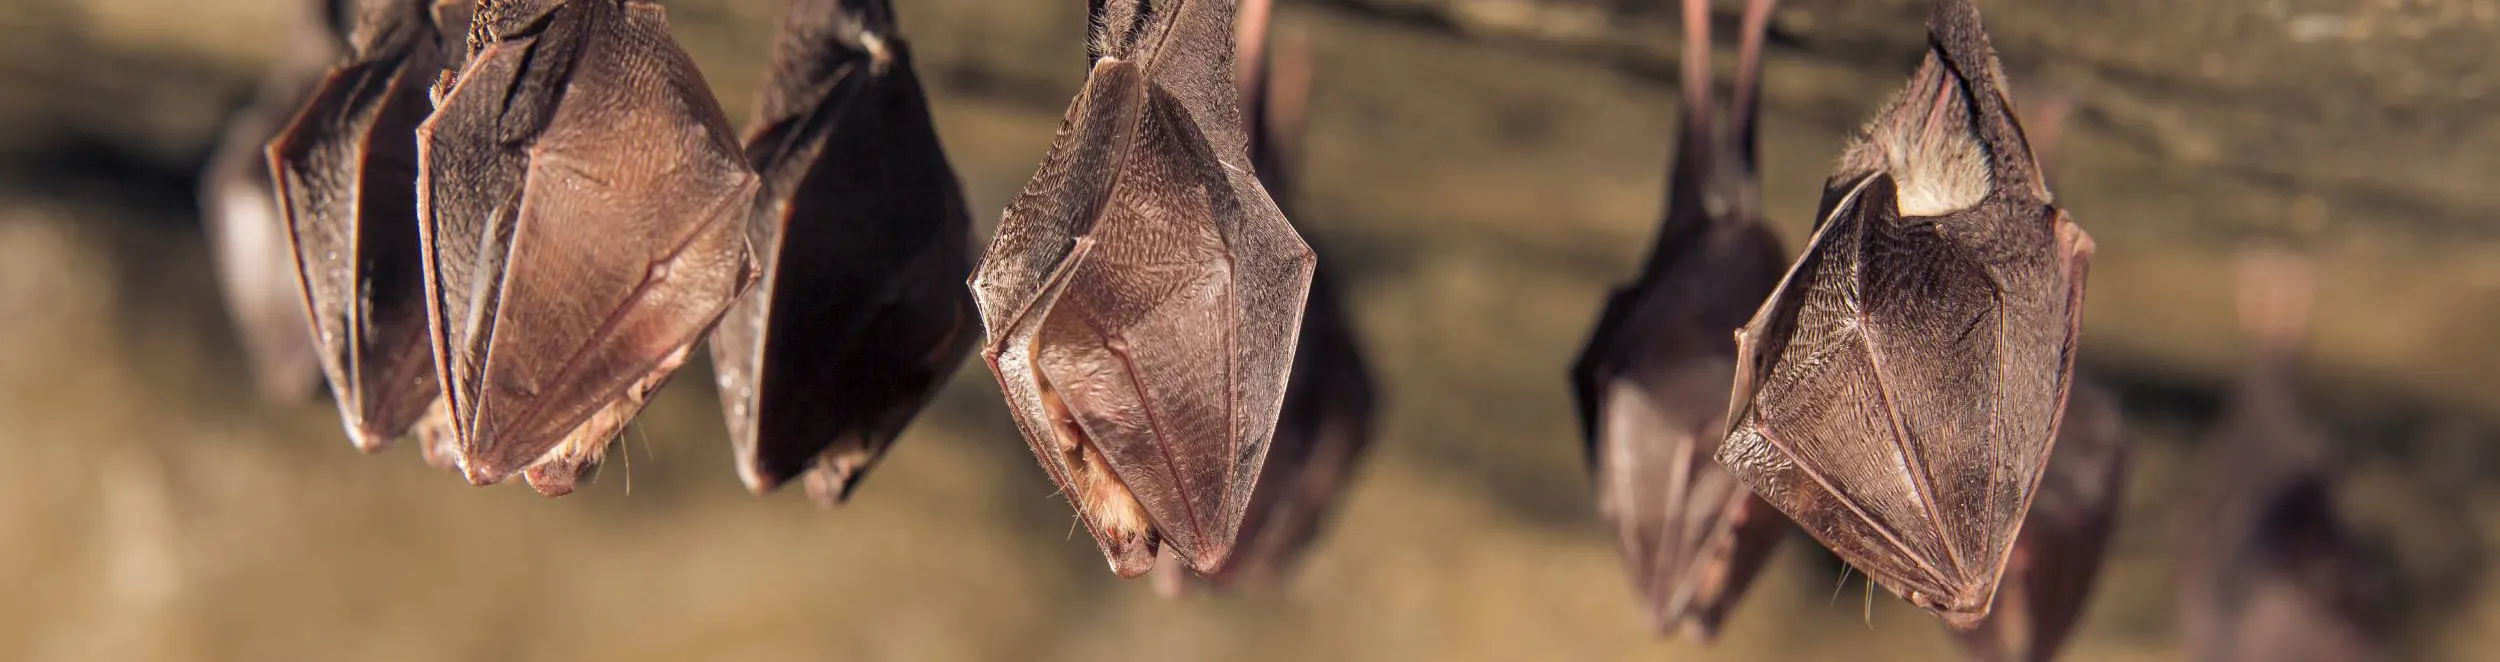 Bats hanging upside down sleeping - Ja-Roy Pest Control serving Baton Rouge & Covington